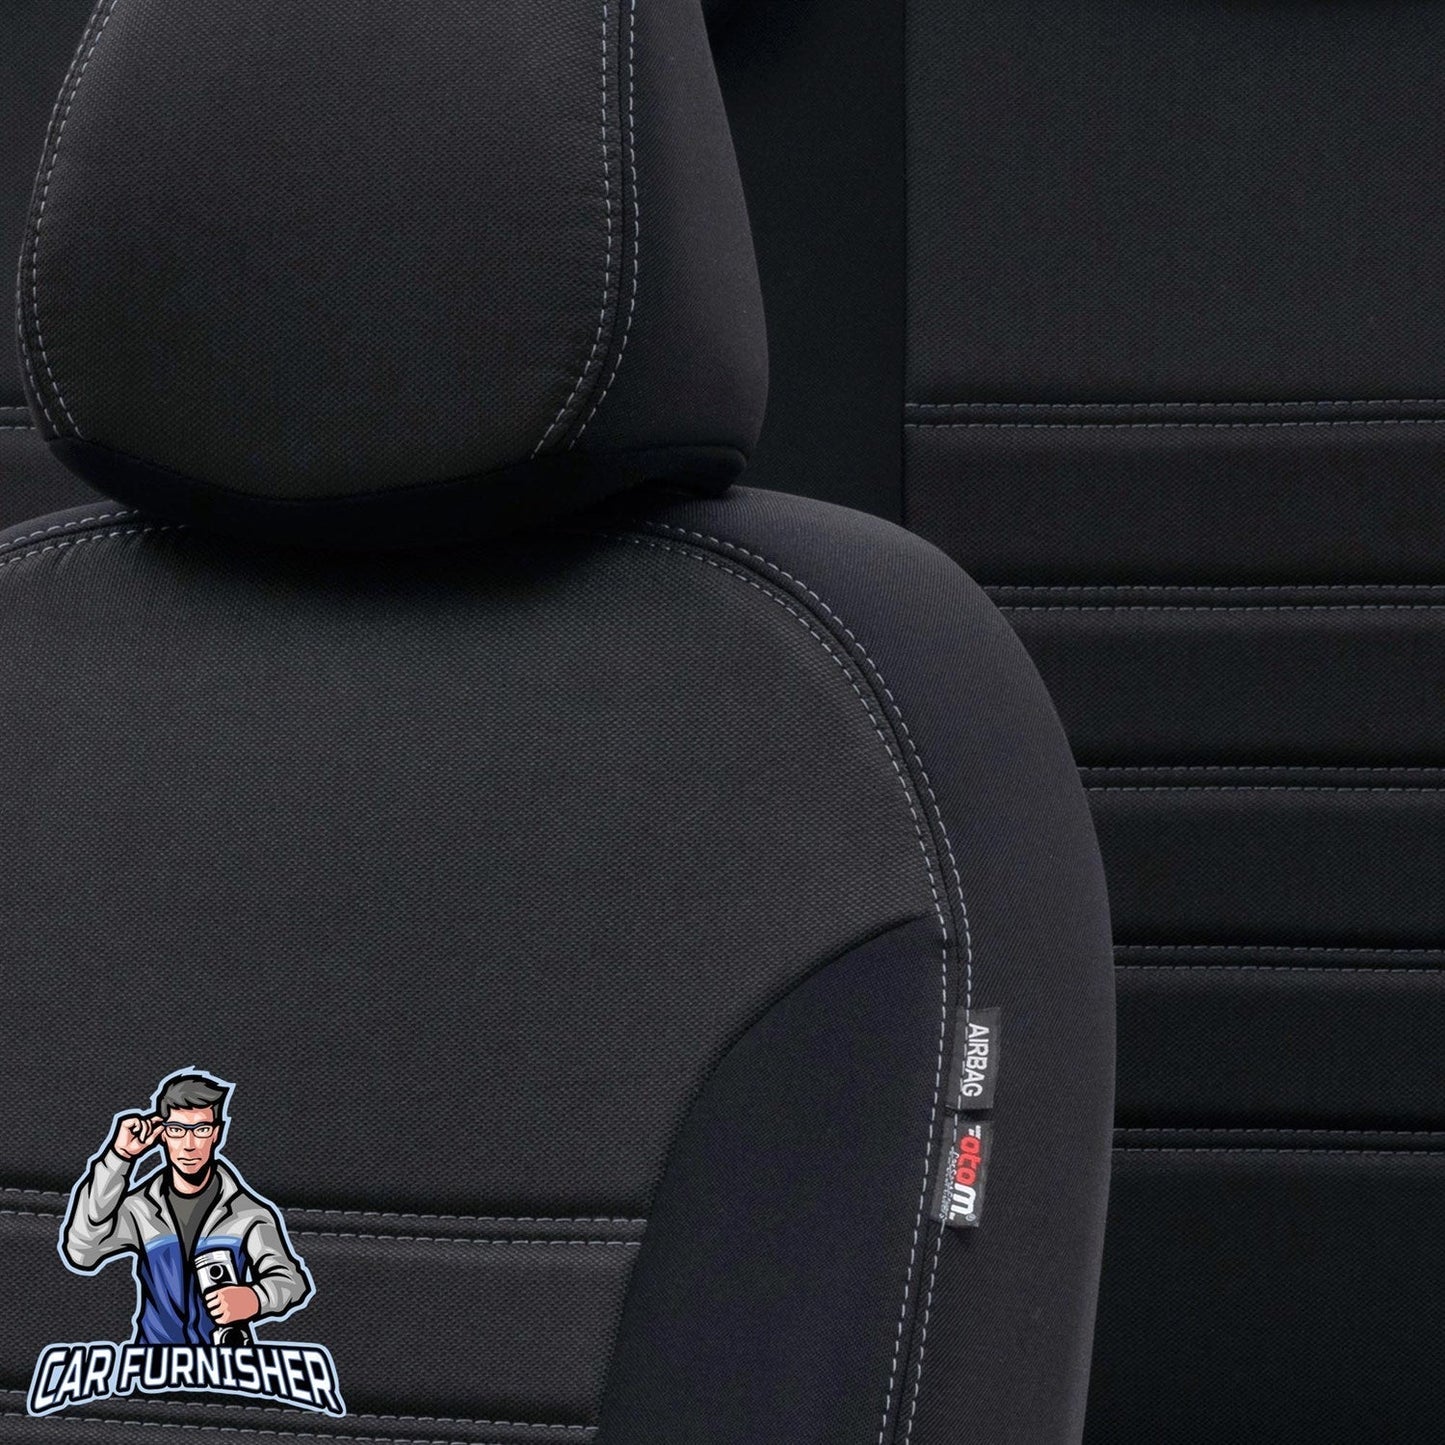 Ford Kuga Seat Covers Original Jacquard Design Black Jacquard Fabric